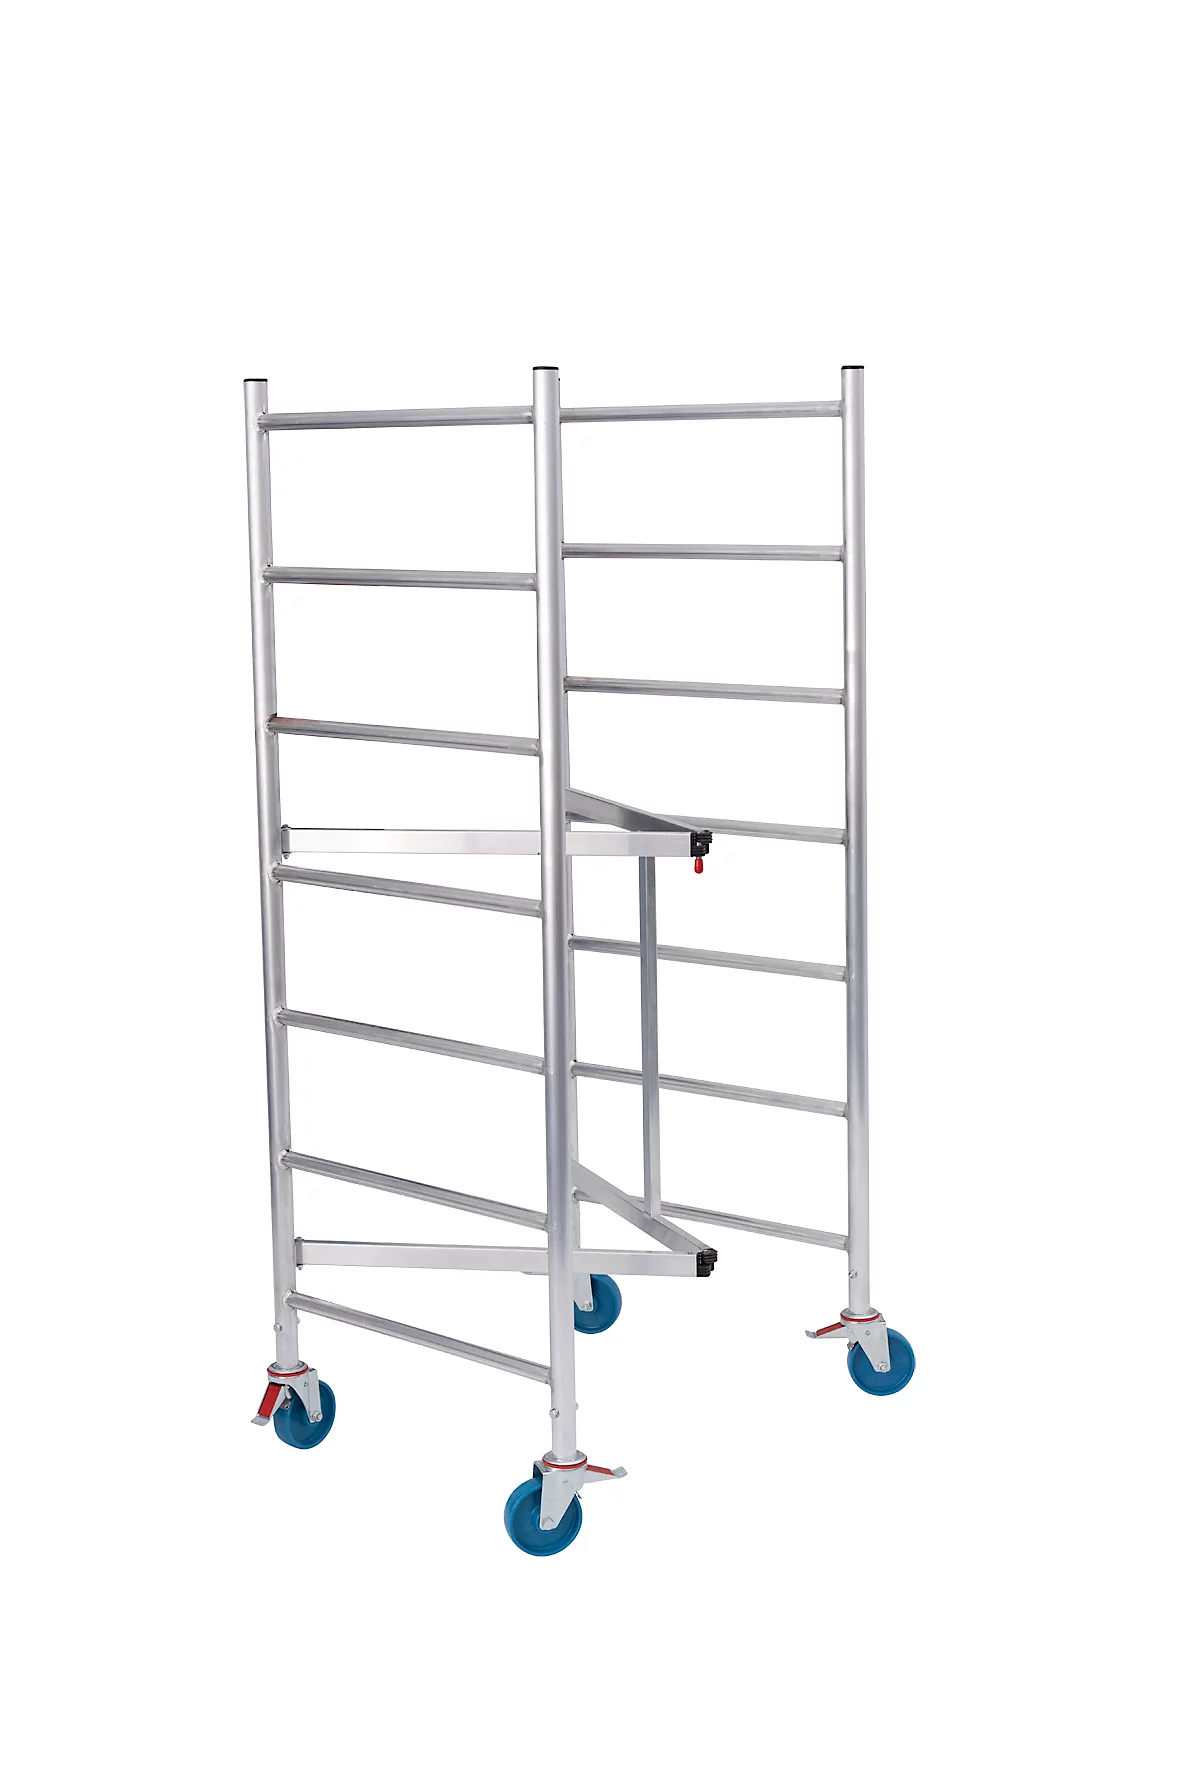 Andamio plegable Krause RollTec®, altura de trabajo hasta 2,9 m, cargable hasta 200 kg/m2, con cubierta, móvil, aluminio